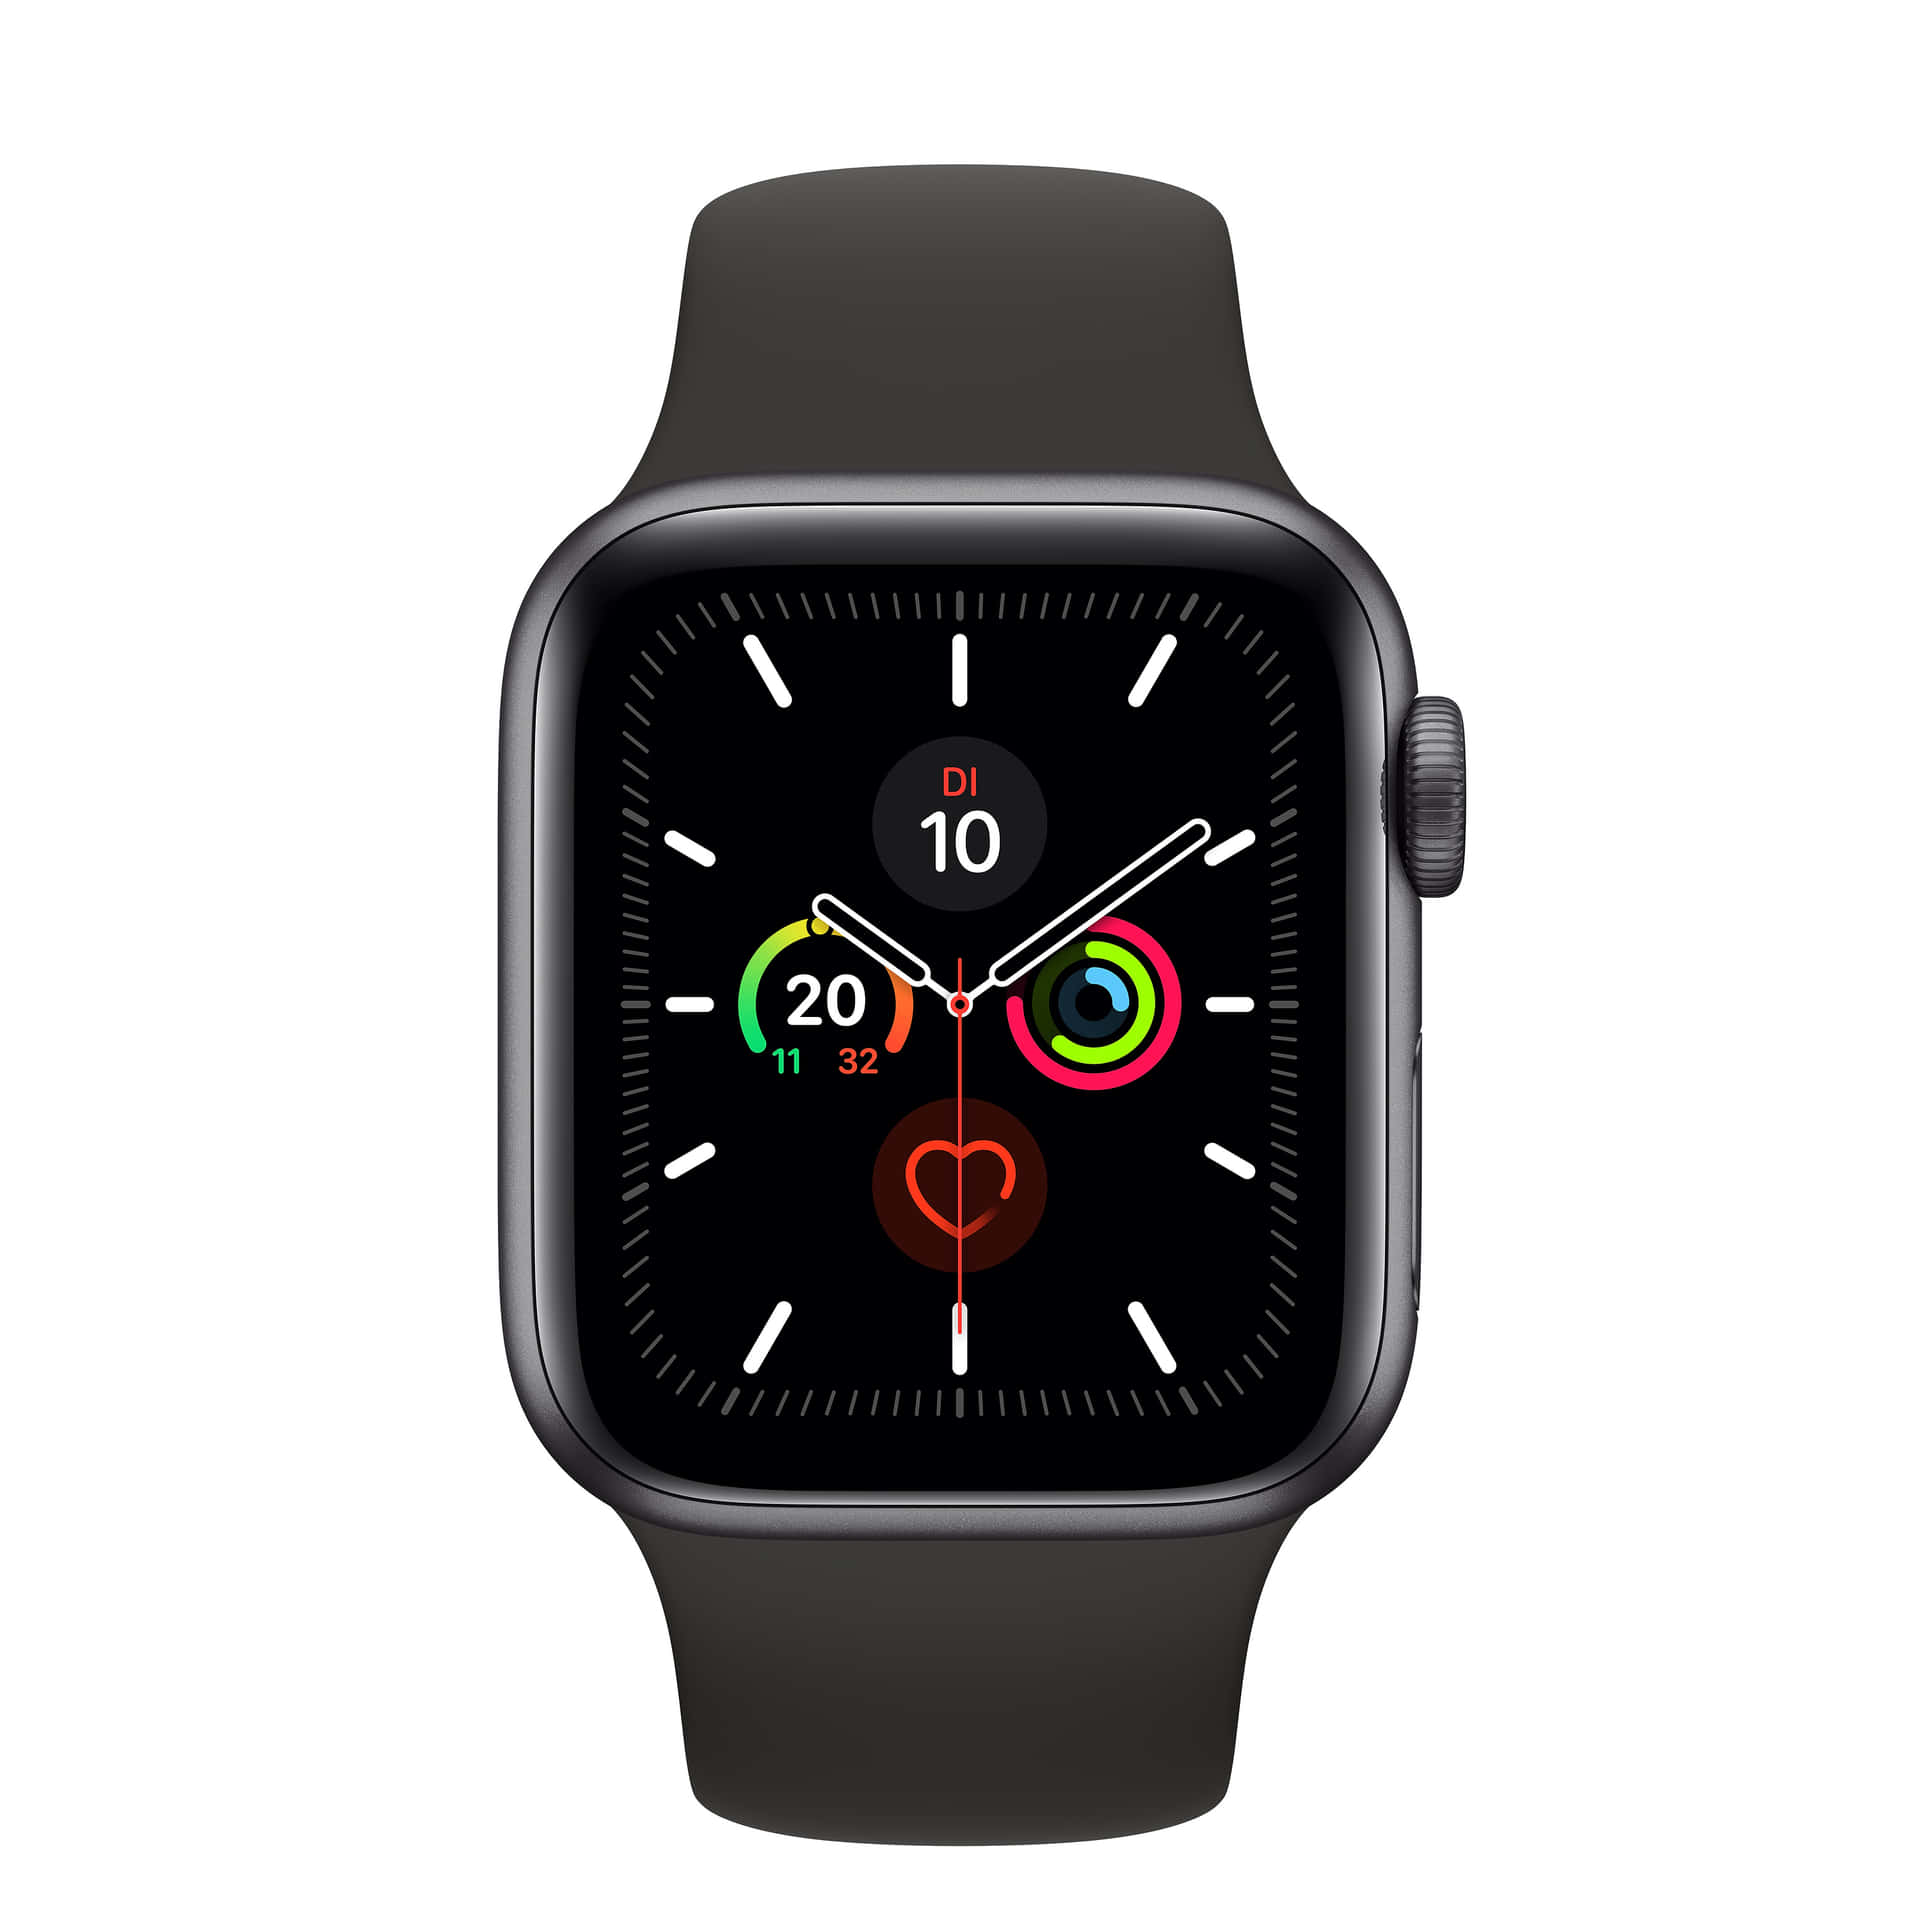 Download Apple Watch Series 5 - Black | Wallpapers.com